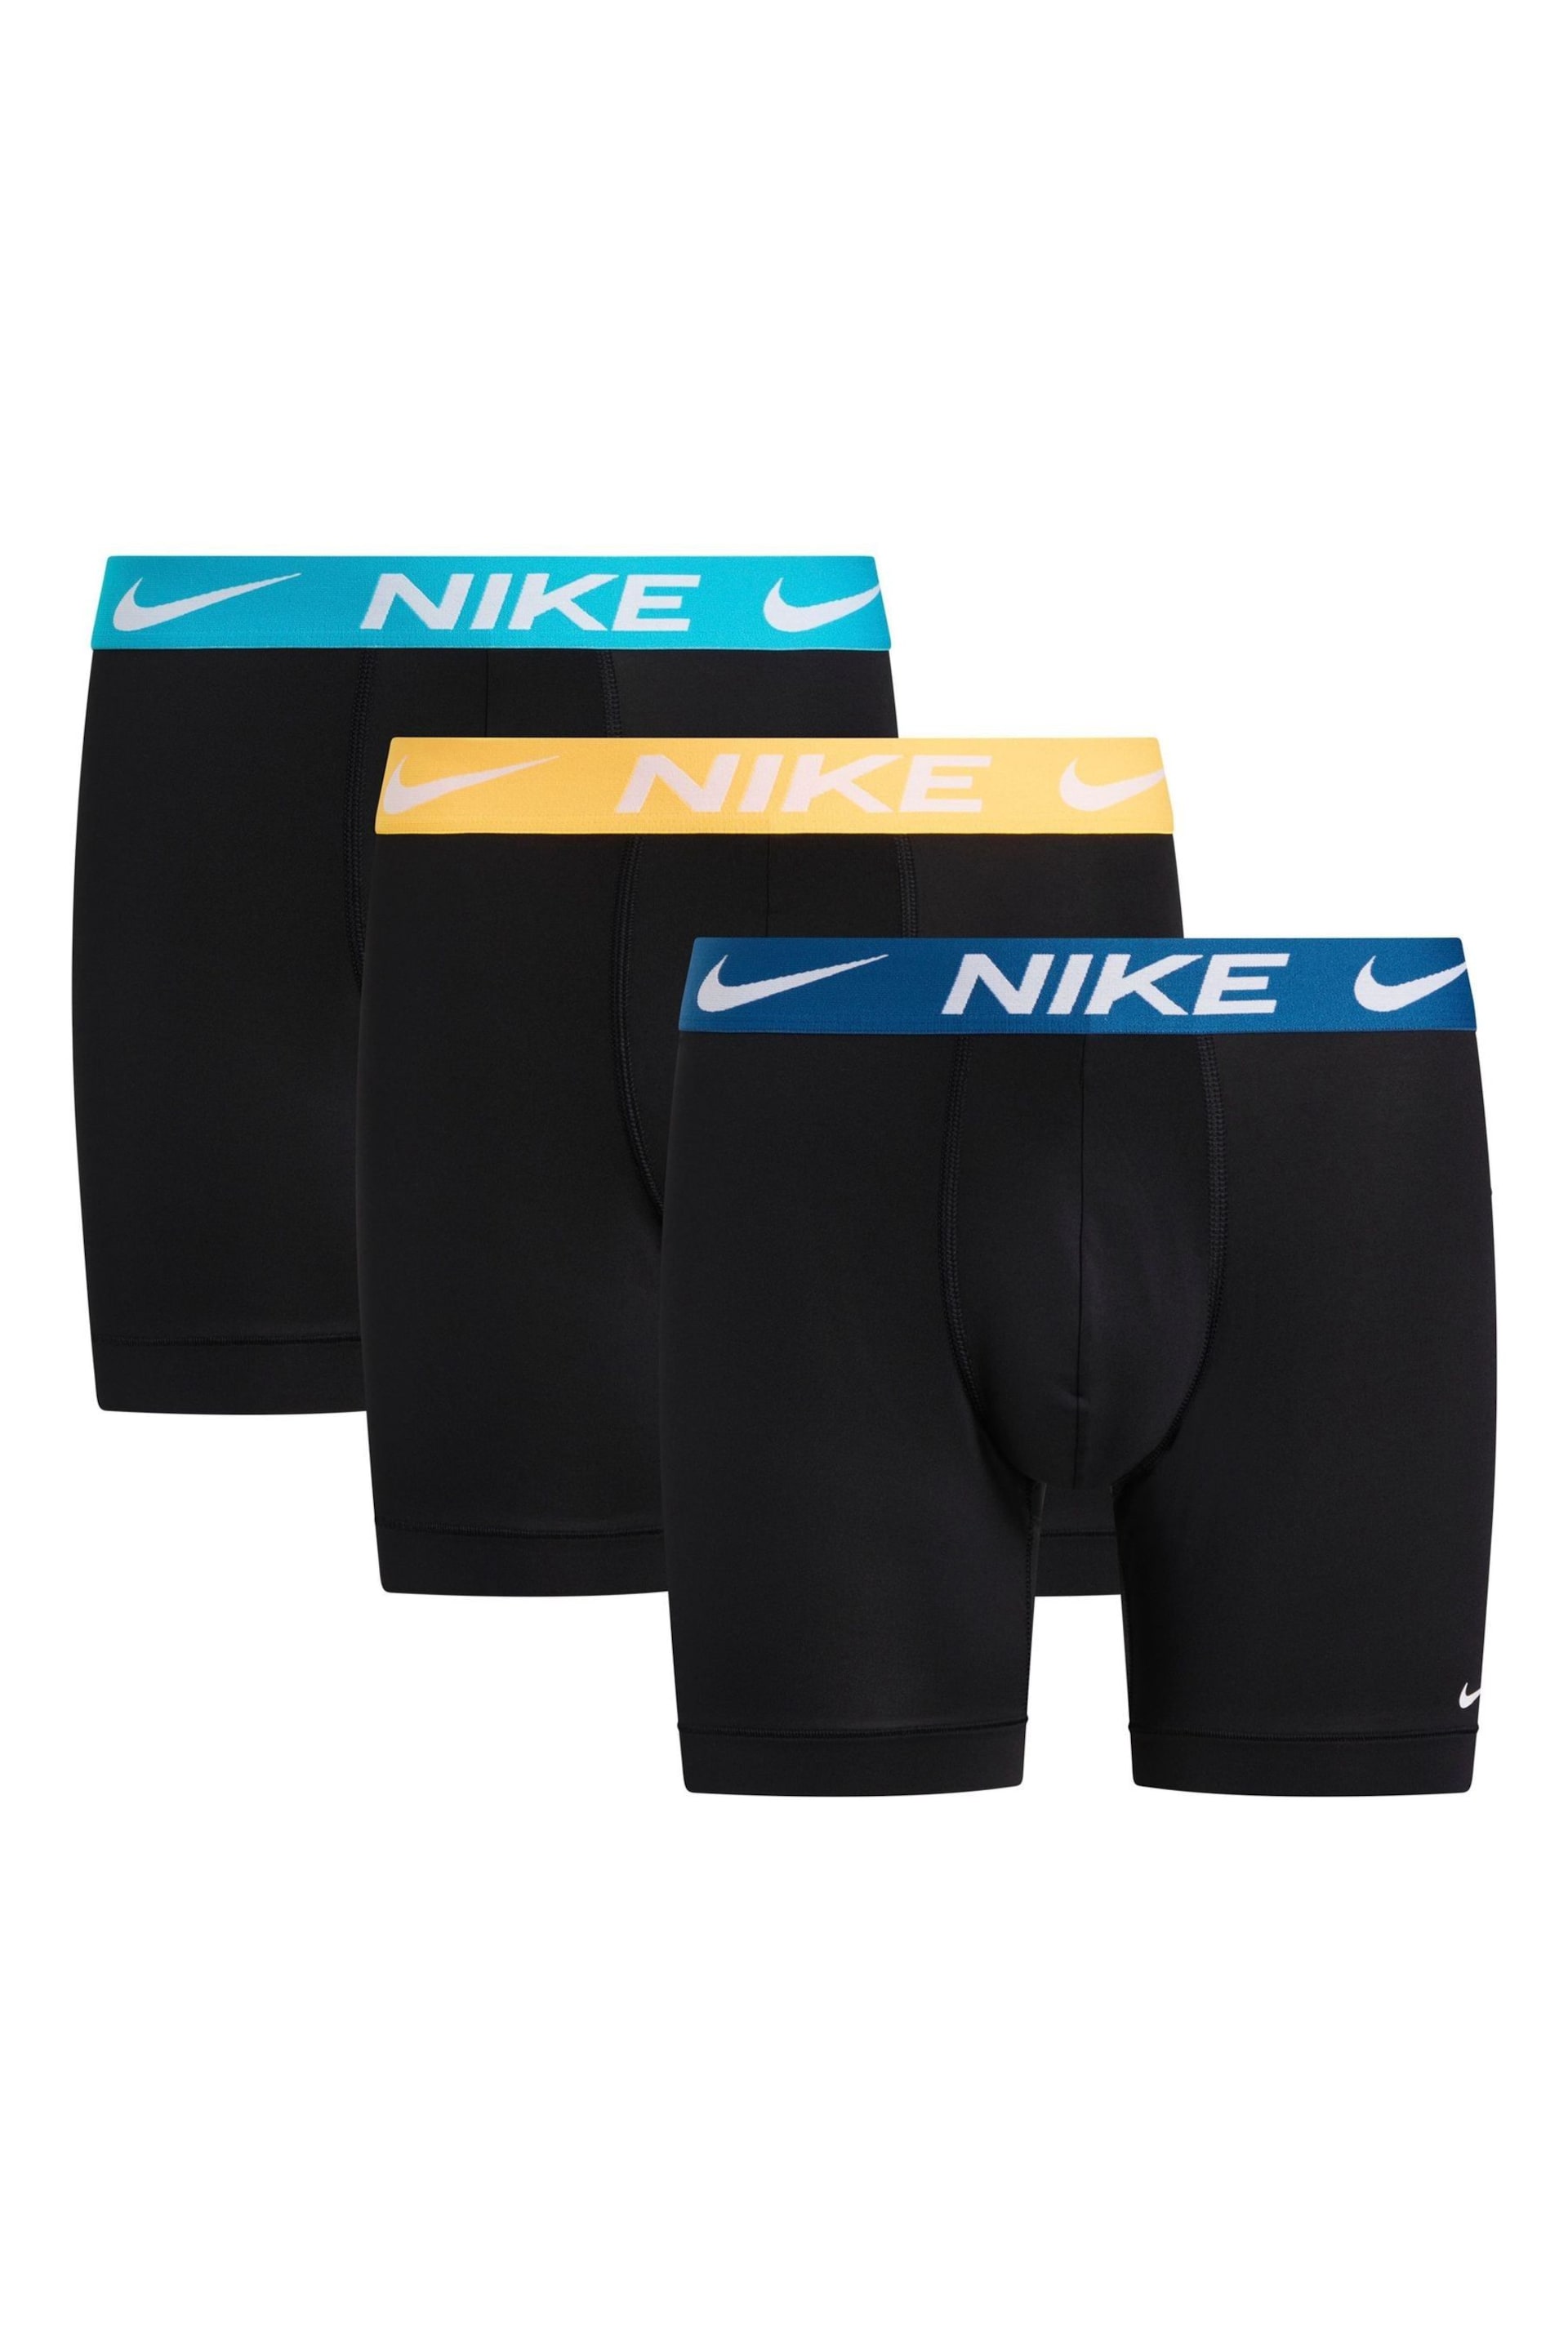 Nike Black Boxer 3 Pack - Image 1 of 1